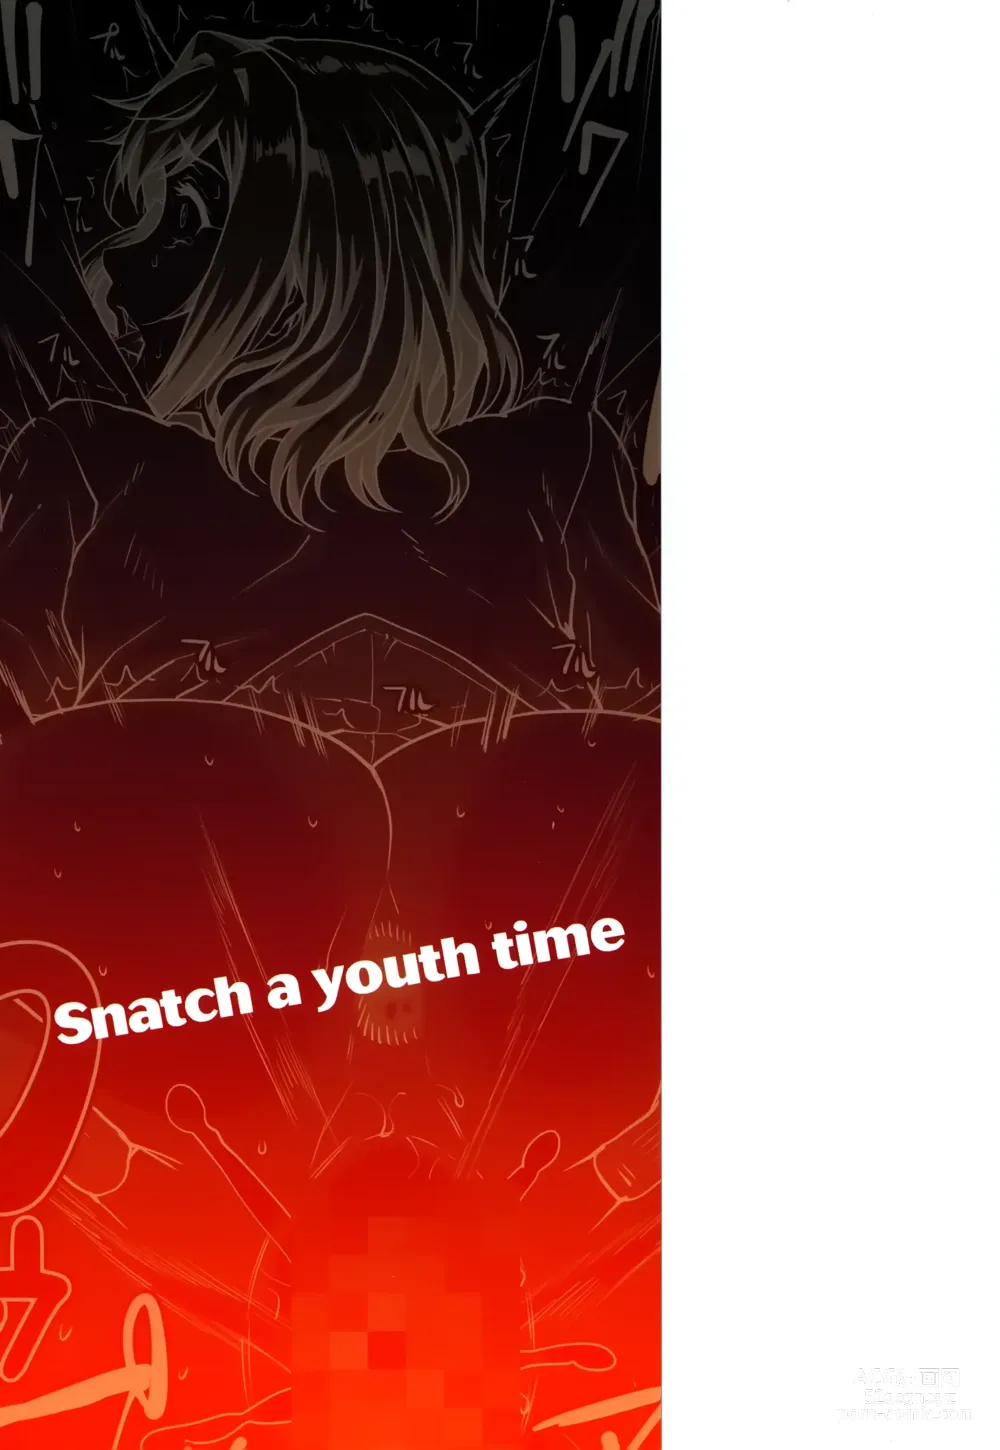 Page 202 of manga Aoharu Snatch - Santch a youth time